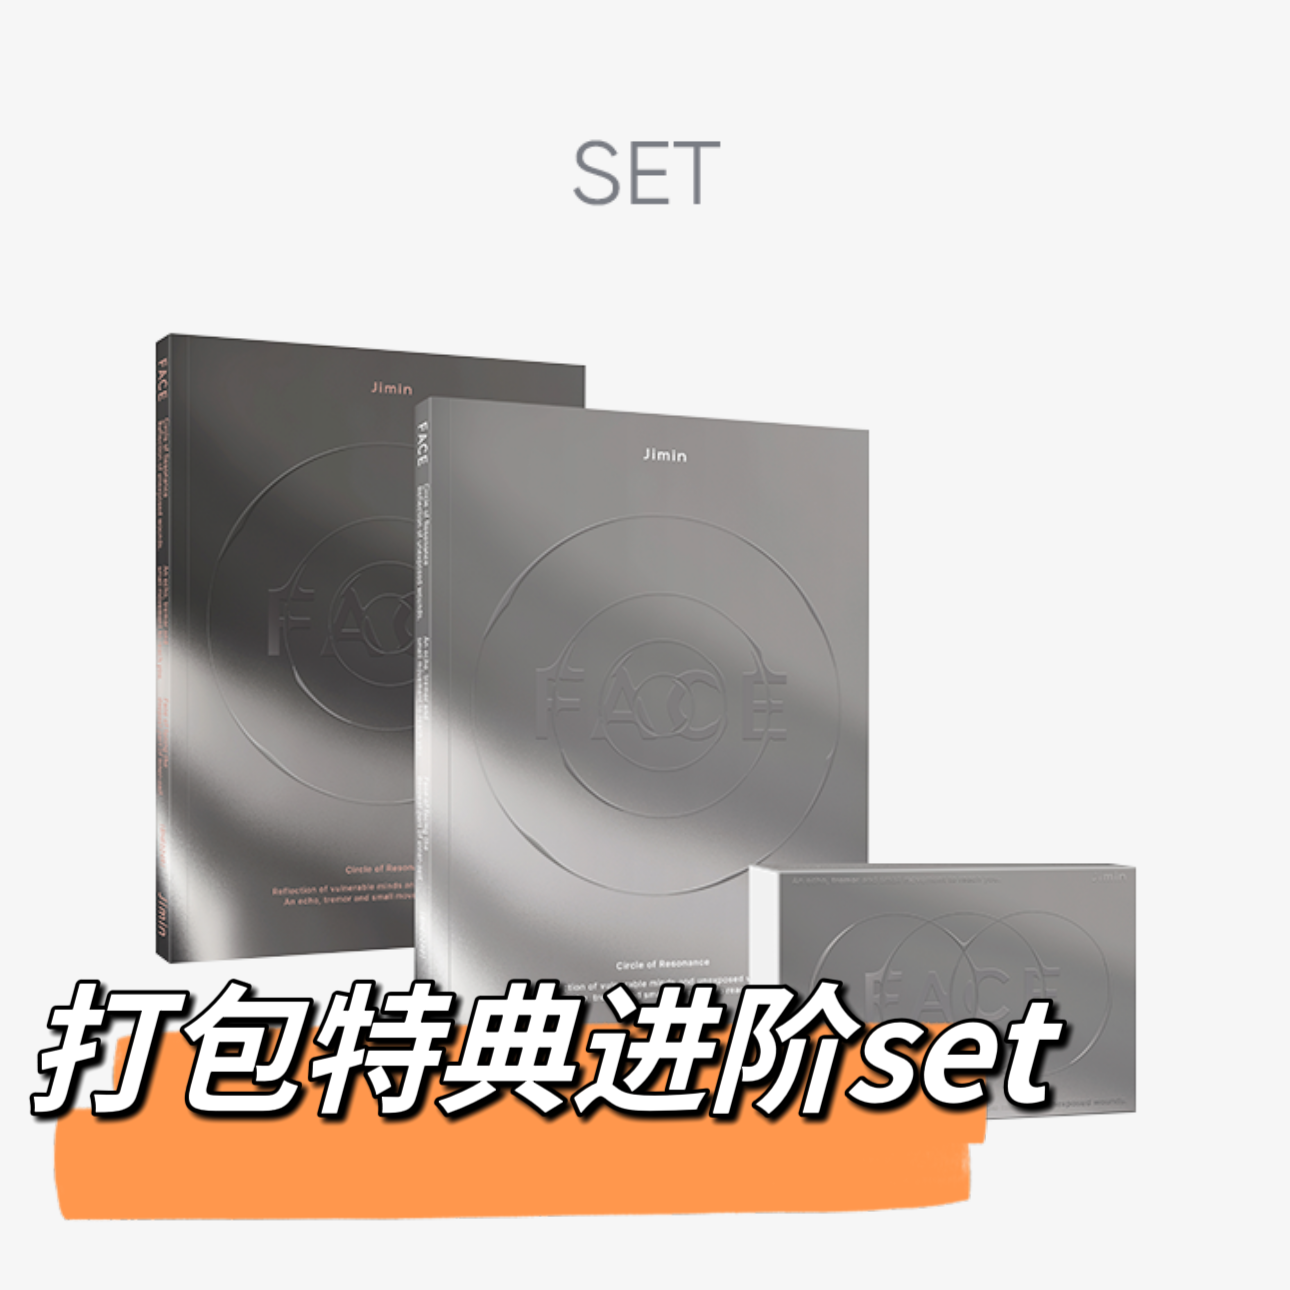 [全款 进阶特典专] [Ktown4u Special Gift] [3CD 套装] Jimin (BTS) - [FACE] (Invisible Face + Undefinable Face + Weverse Albums)_朴智旻散粉